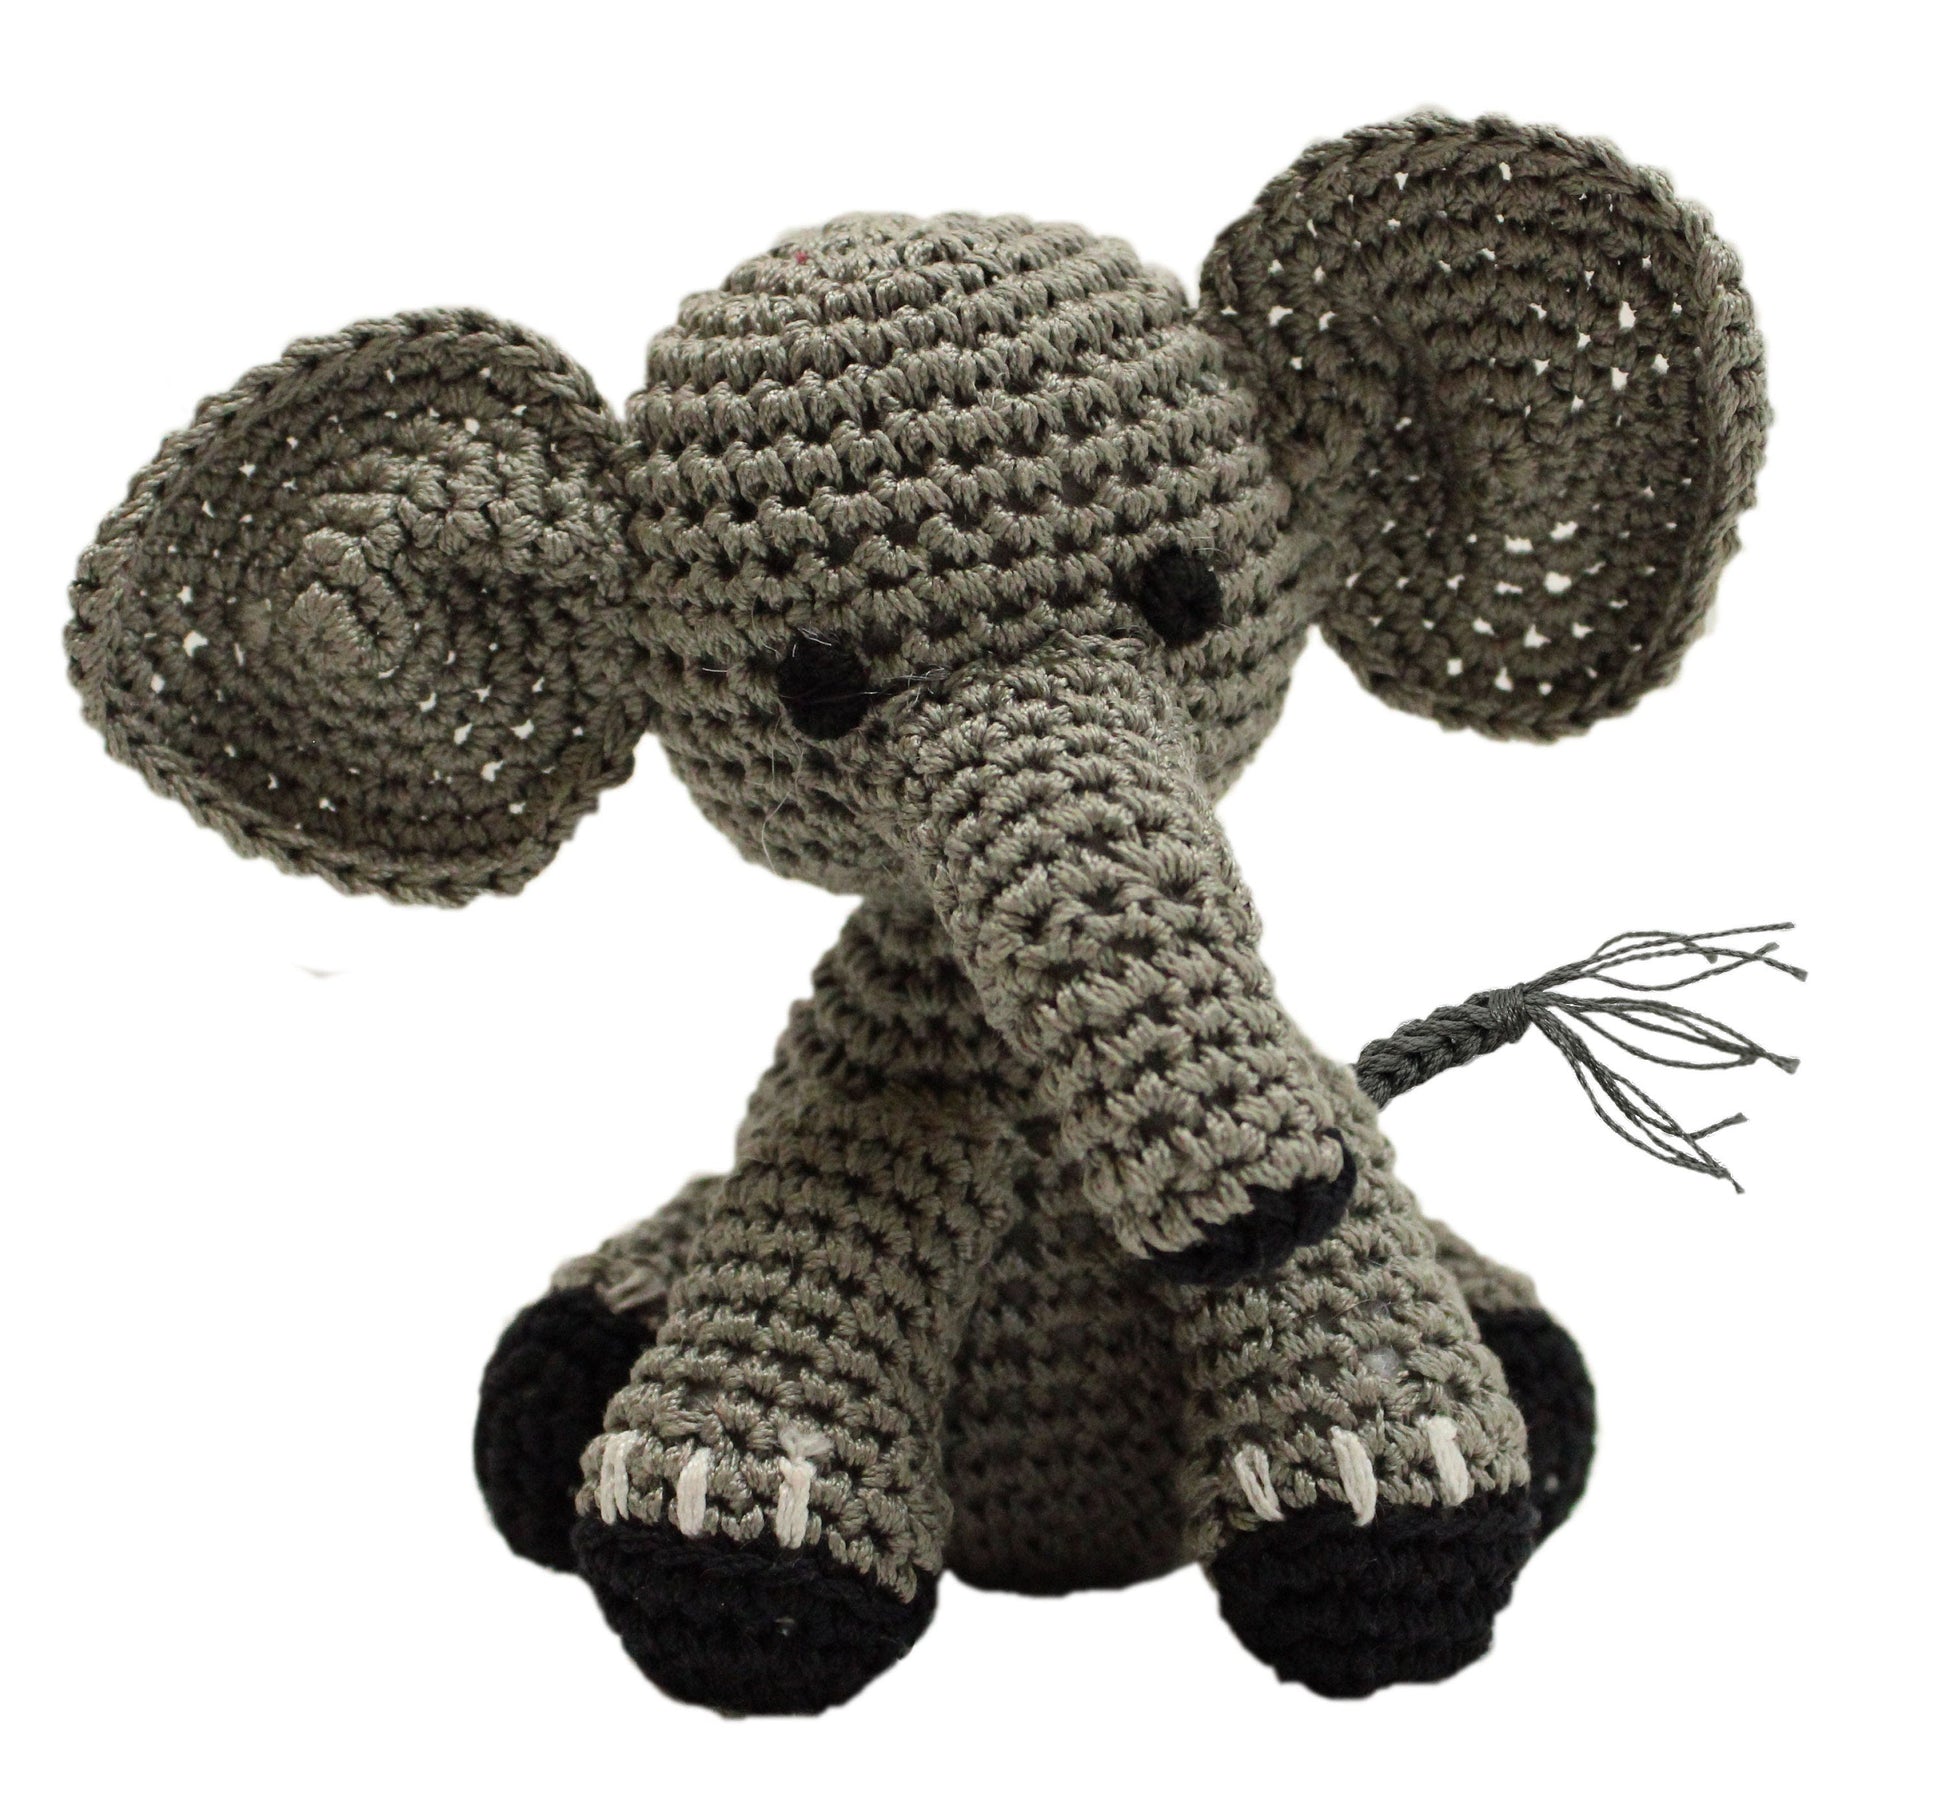 Knit Knacks Organic Cotton Pet, Dog Toys, "Animals" (Choose from: Sloth, Zebra, Giraffe, Hyena, Elephant, Lion, or Sea Turtle)-2